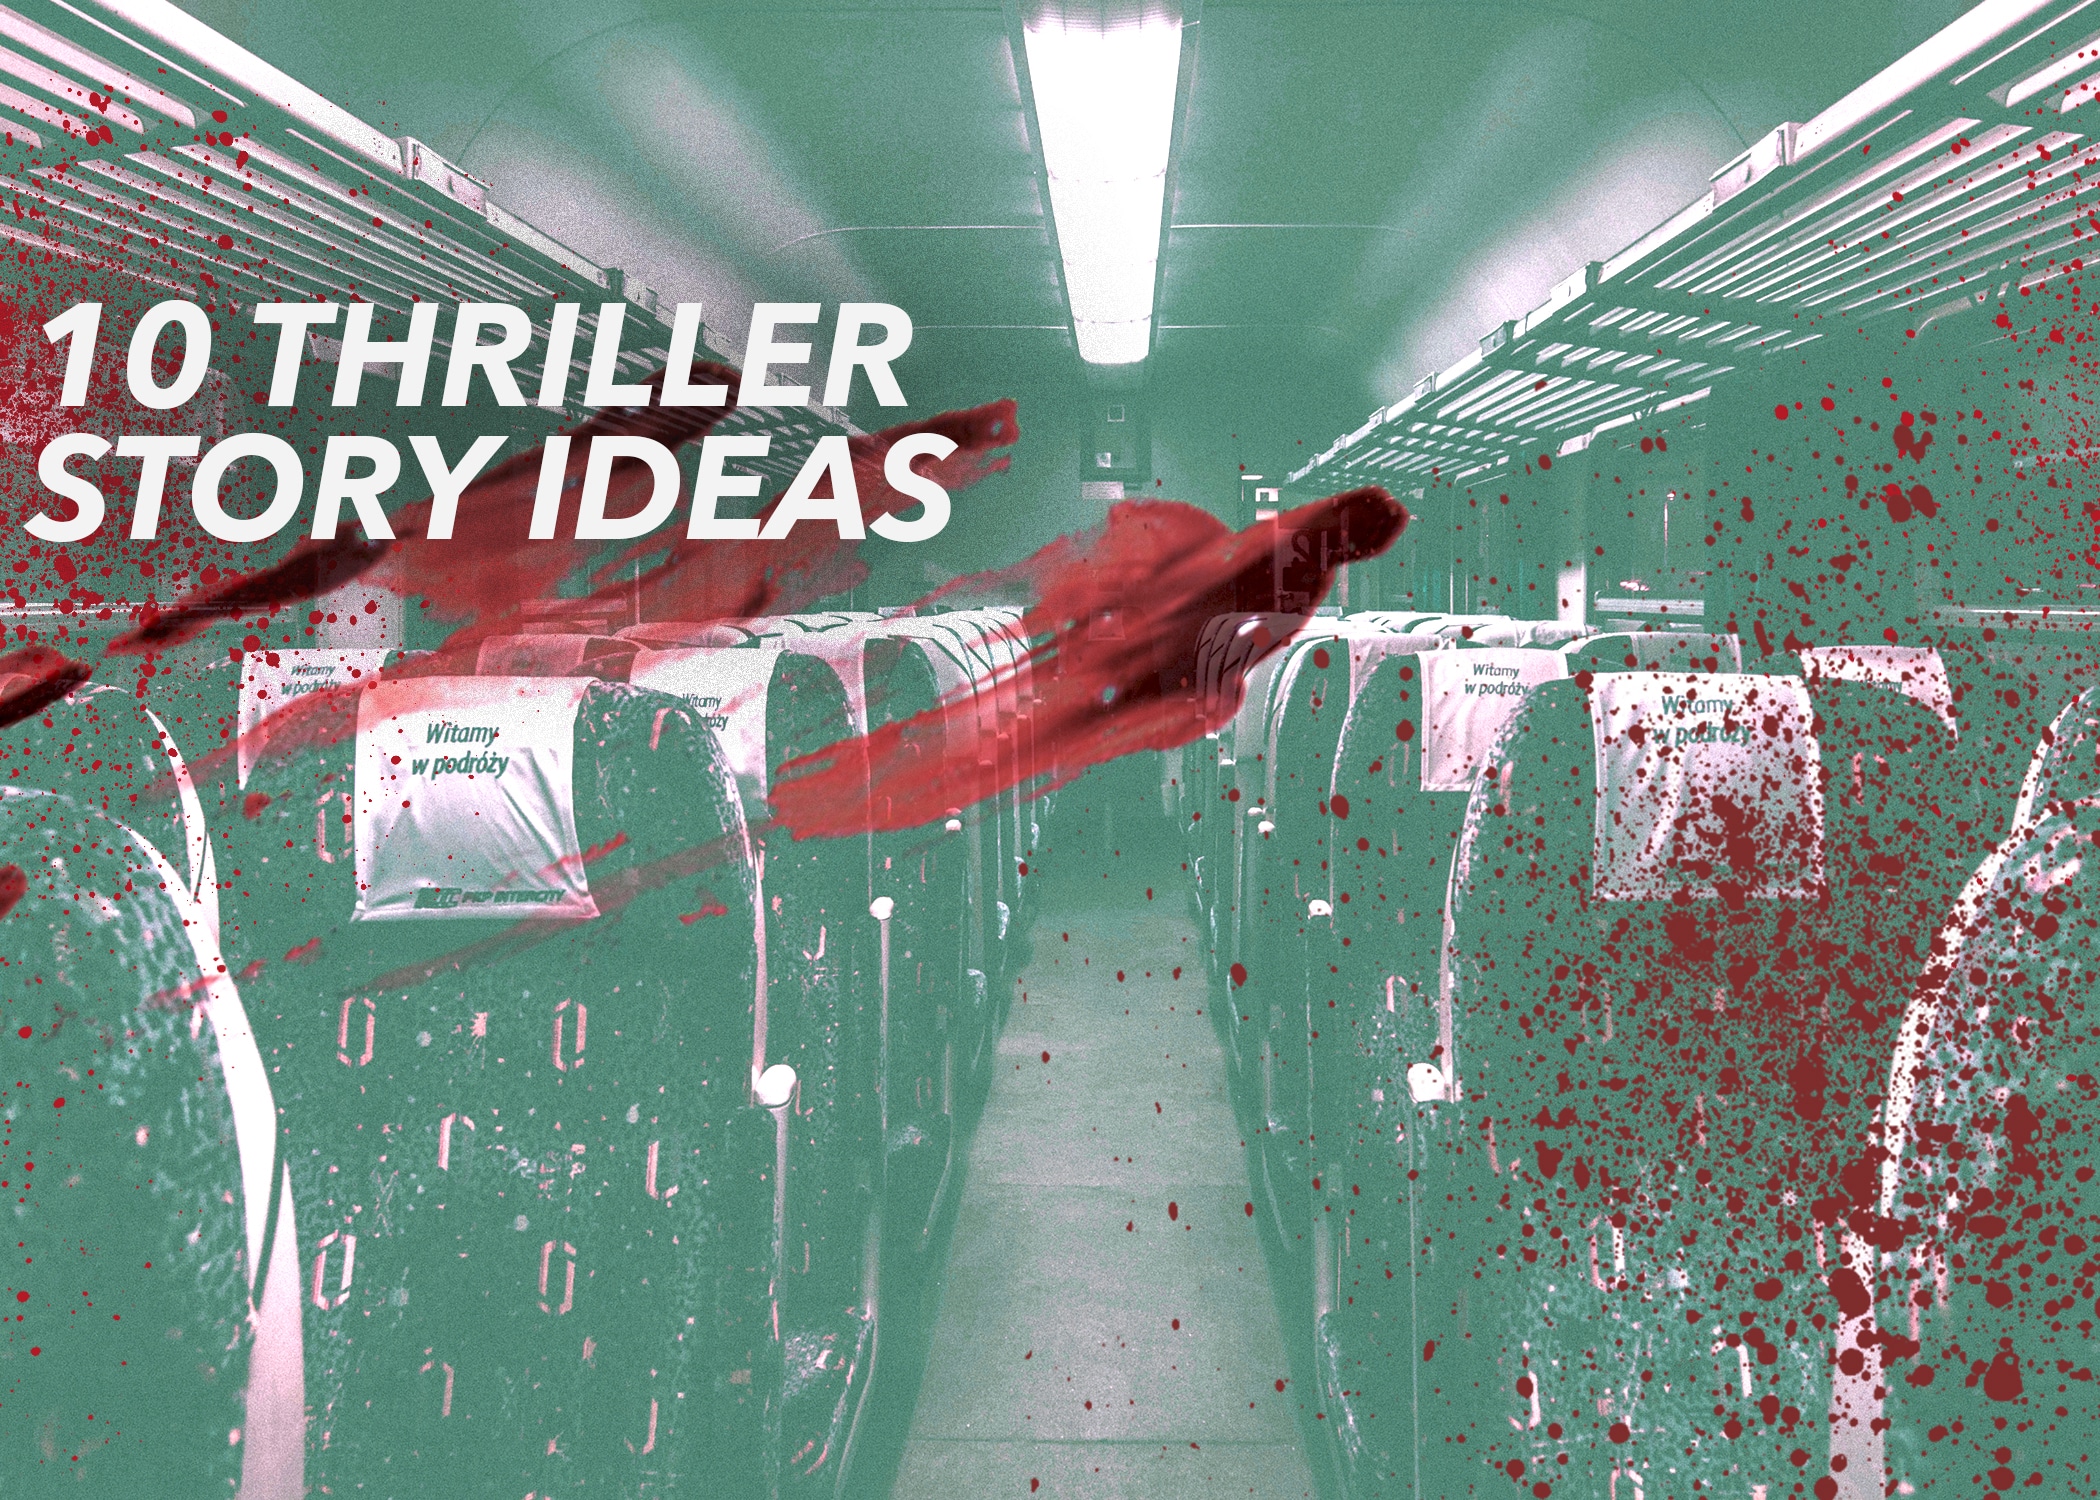 10 Thriller Story Ideas